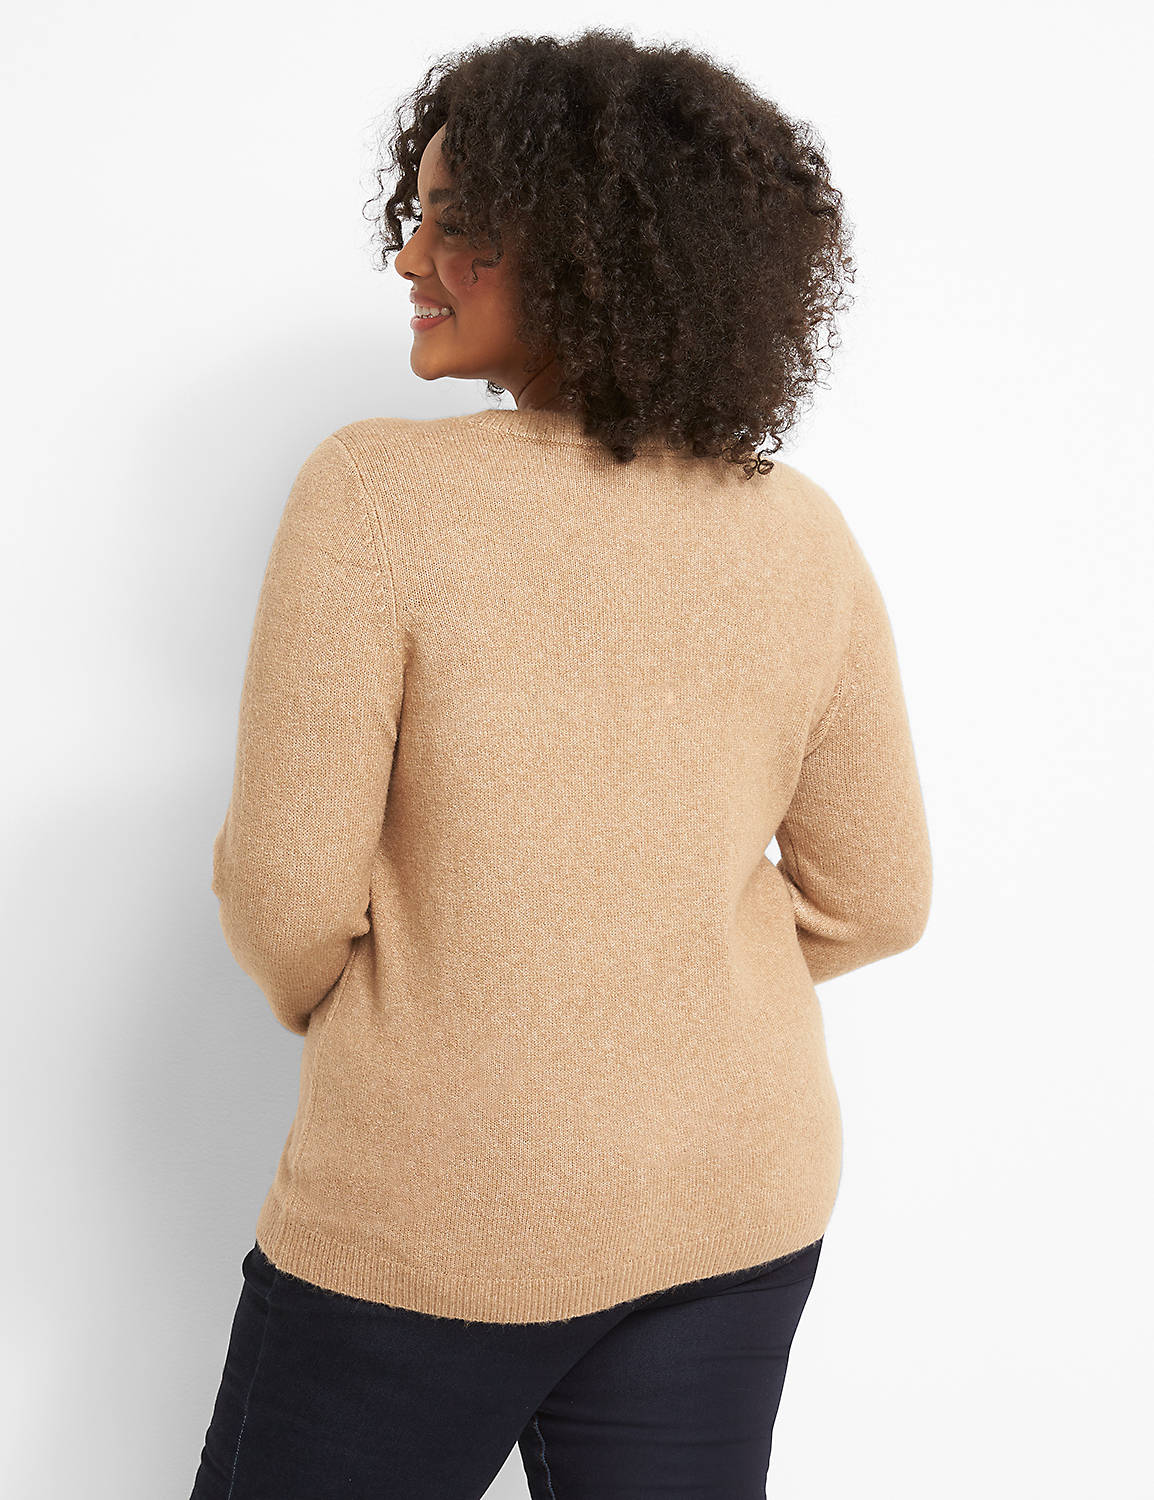 Crew-Neck Icon Sweater Product Image 2